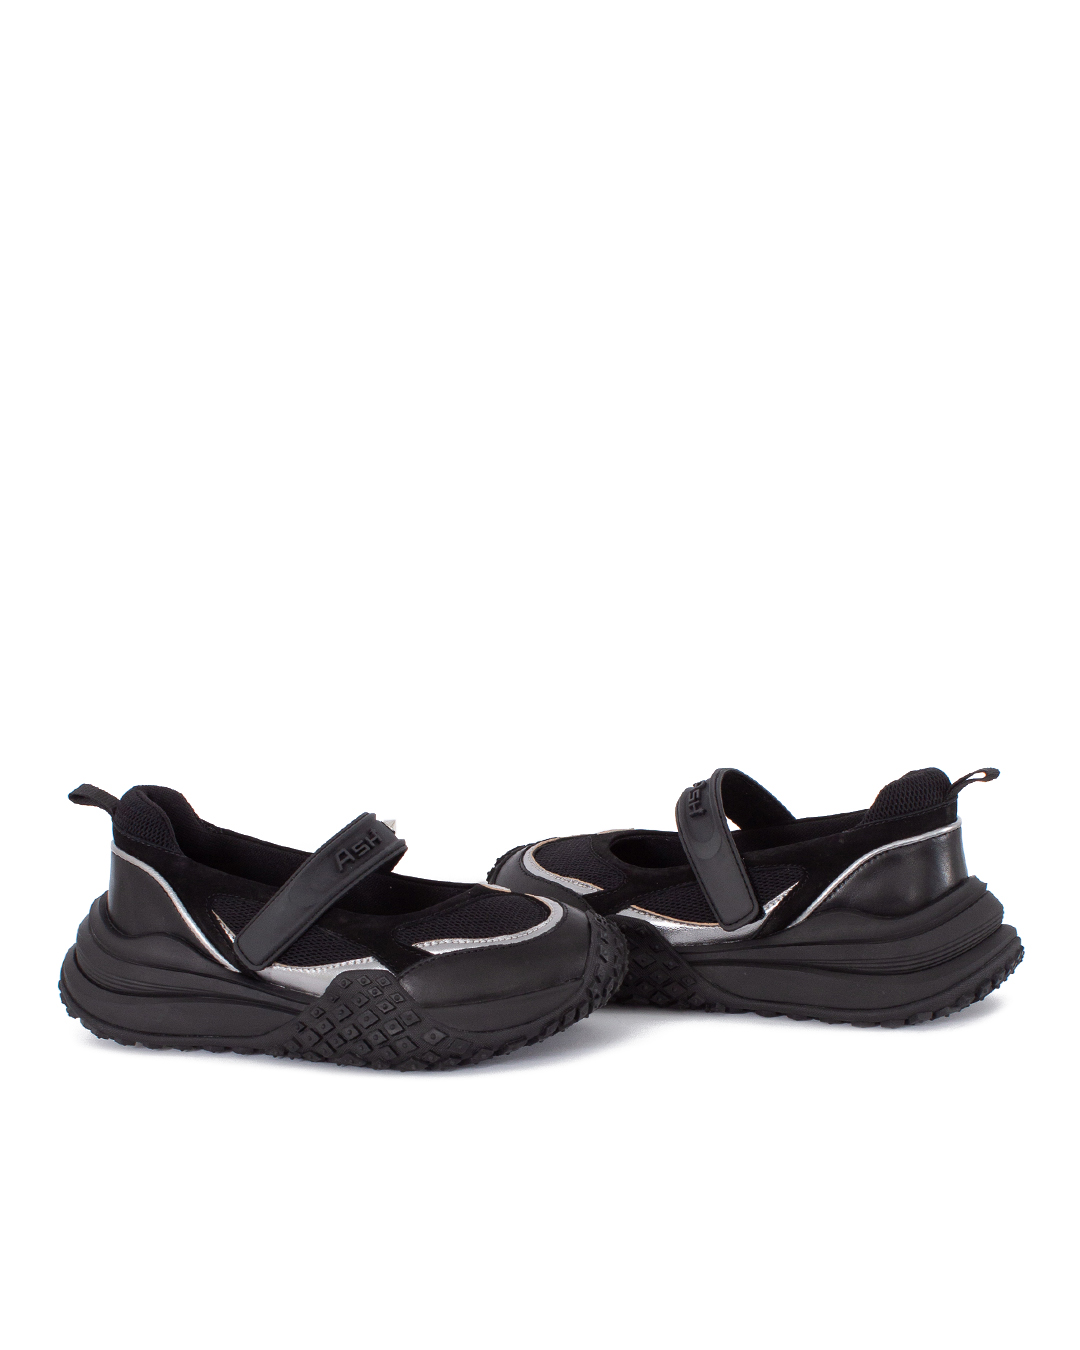 прогулочная обувь JILLY ASH 0AH.AH134898.T черный 36, размер 36 - фото 2